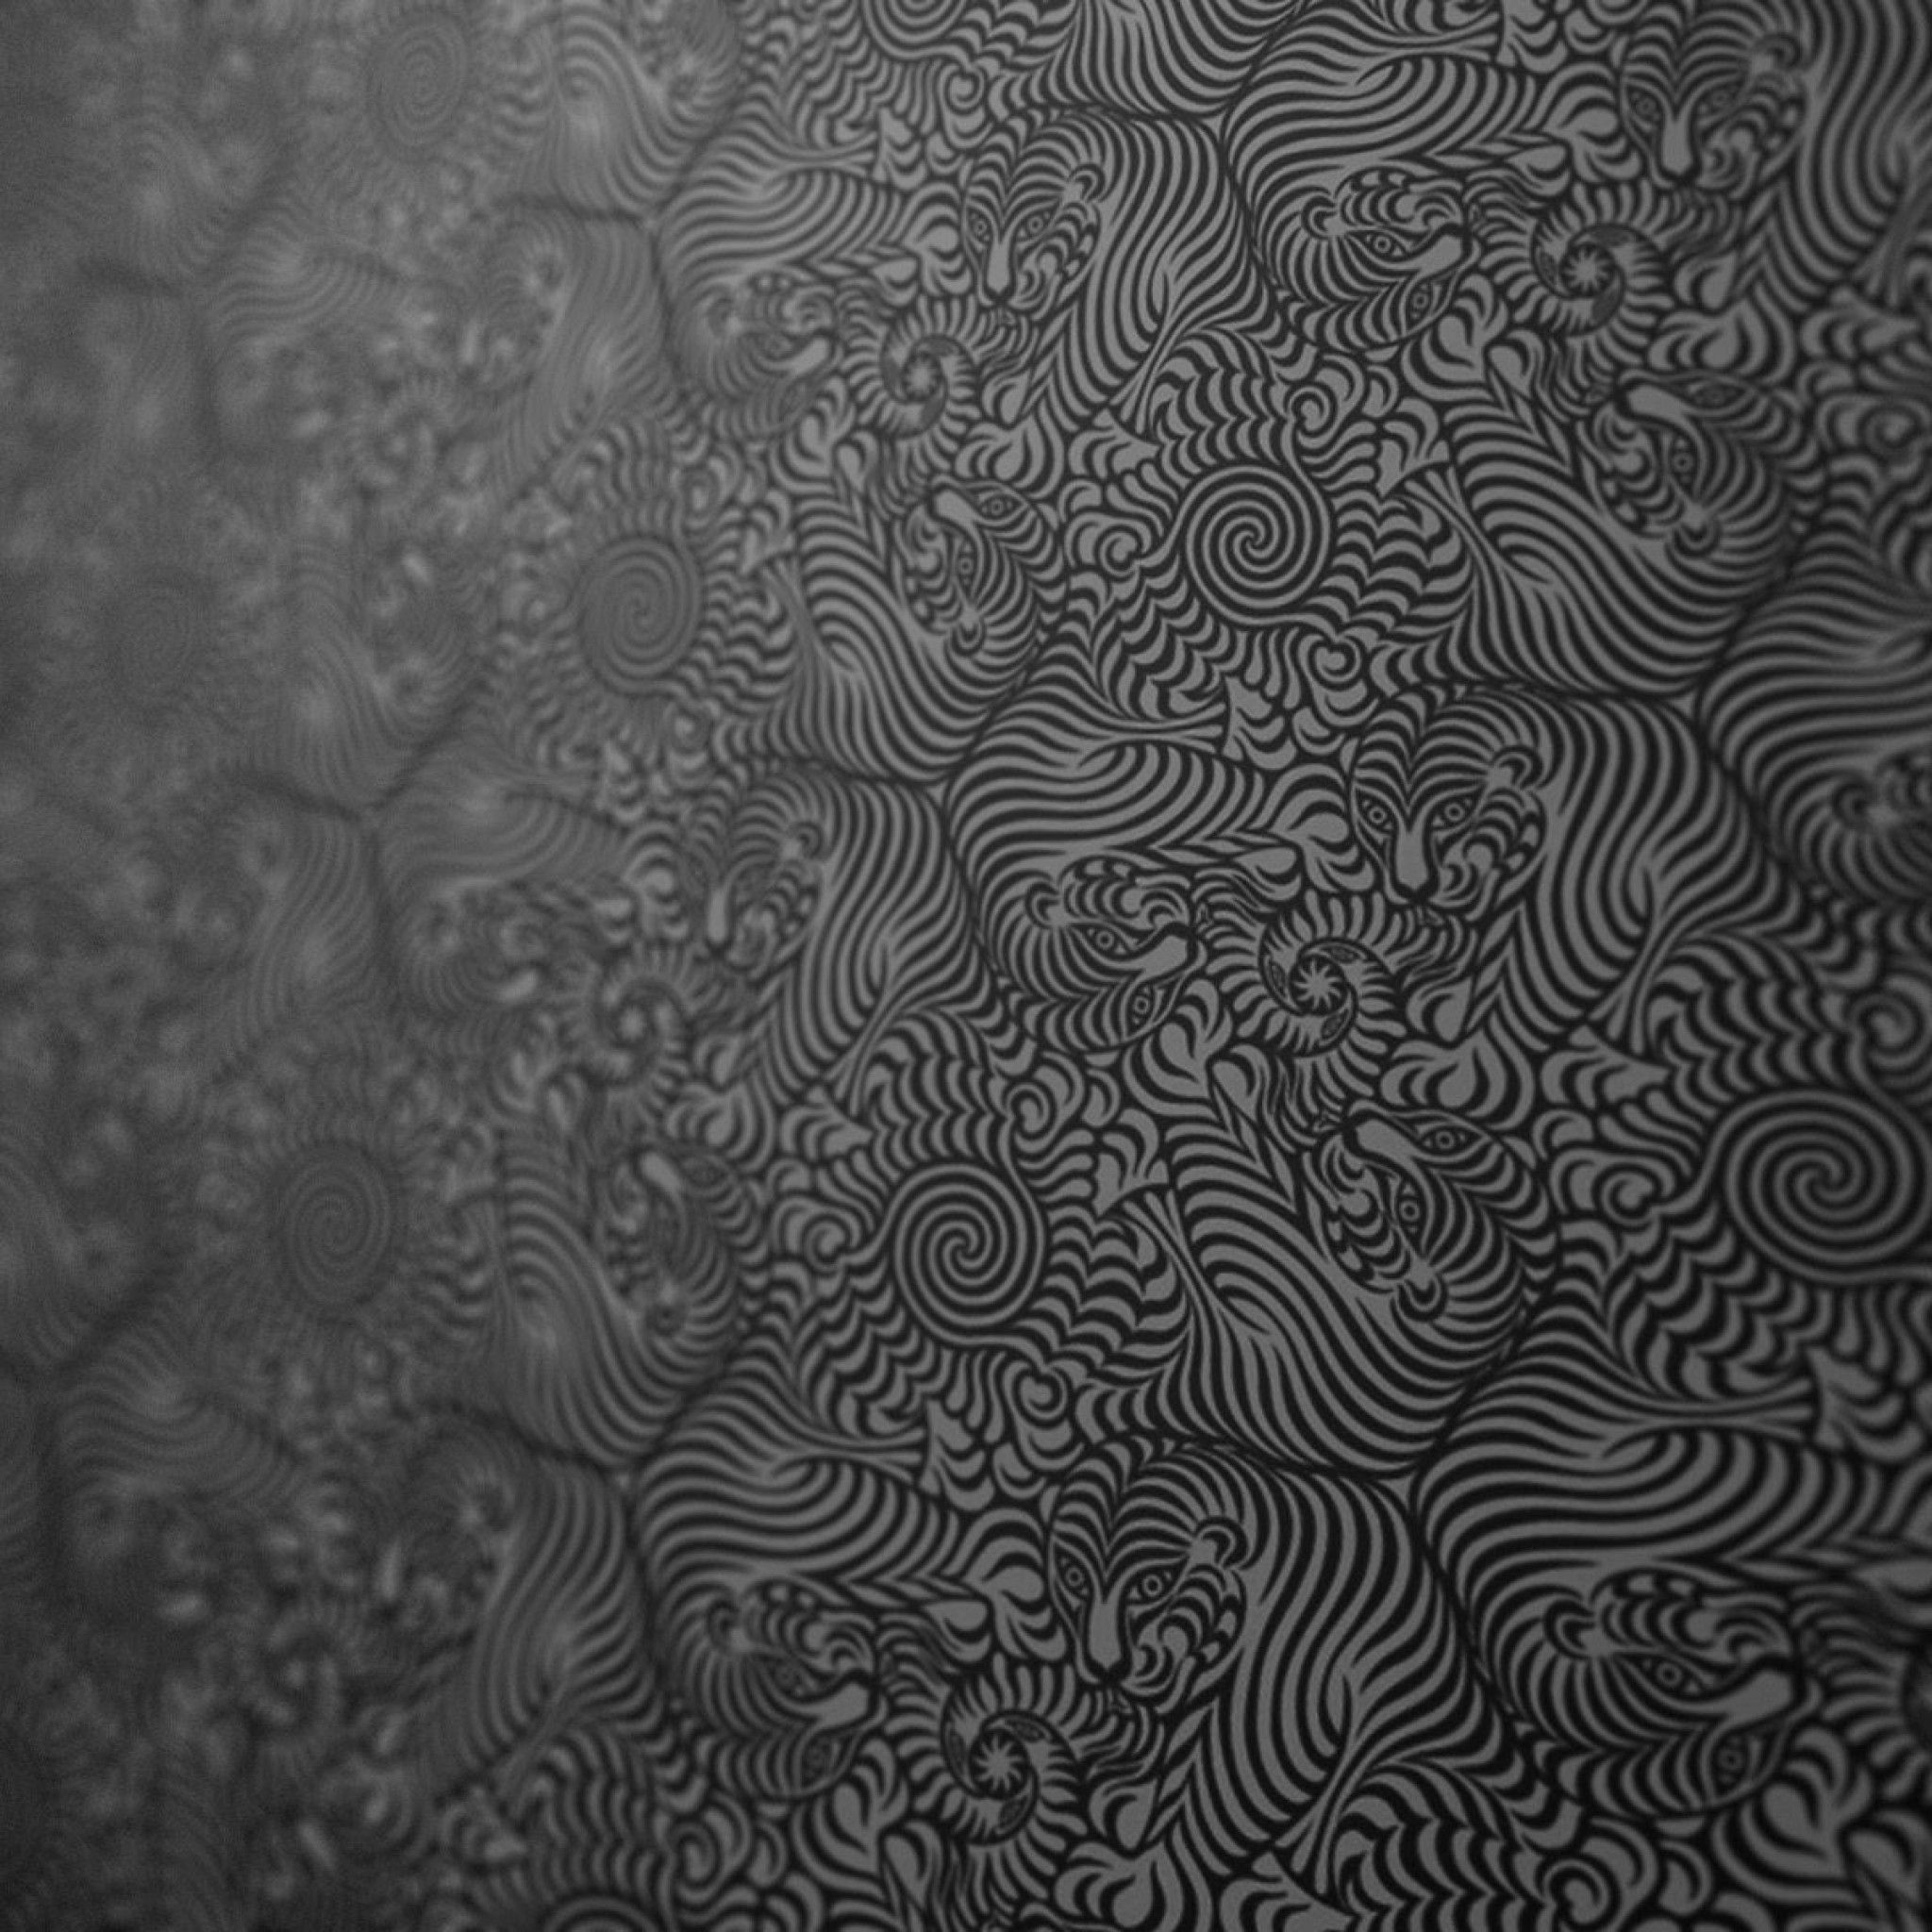 Texture Black White Patterns Tigers iPad Air Wallpaper Download